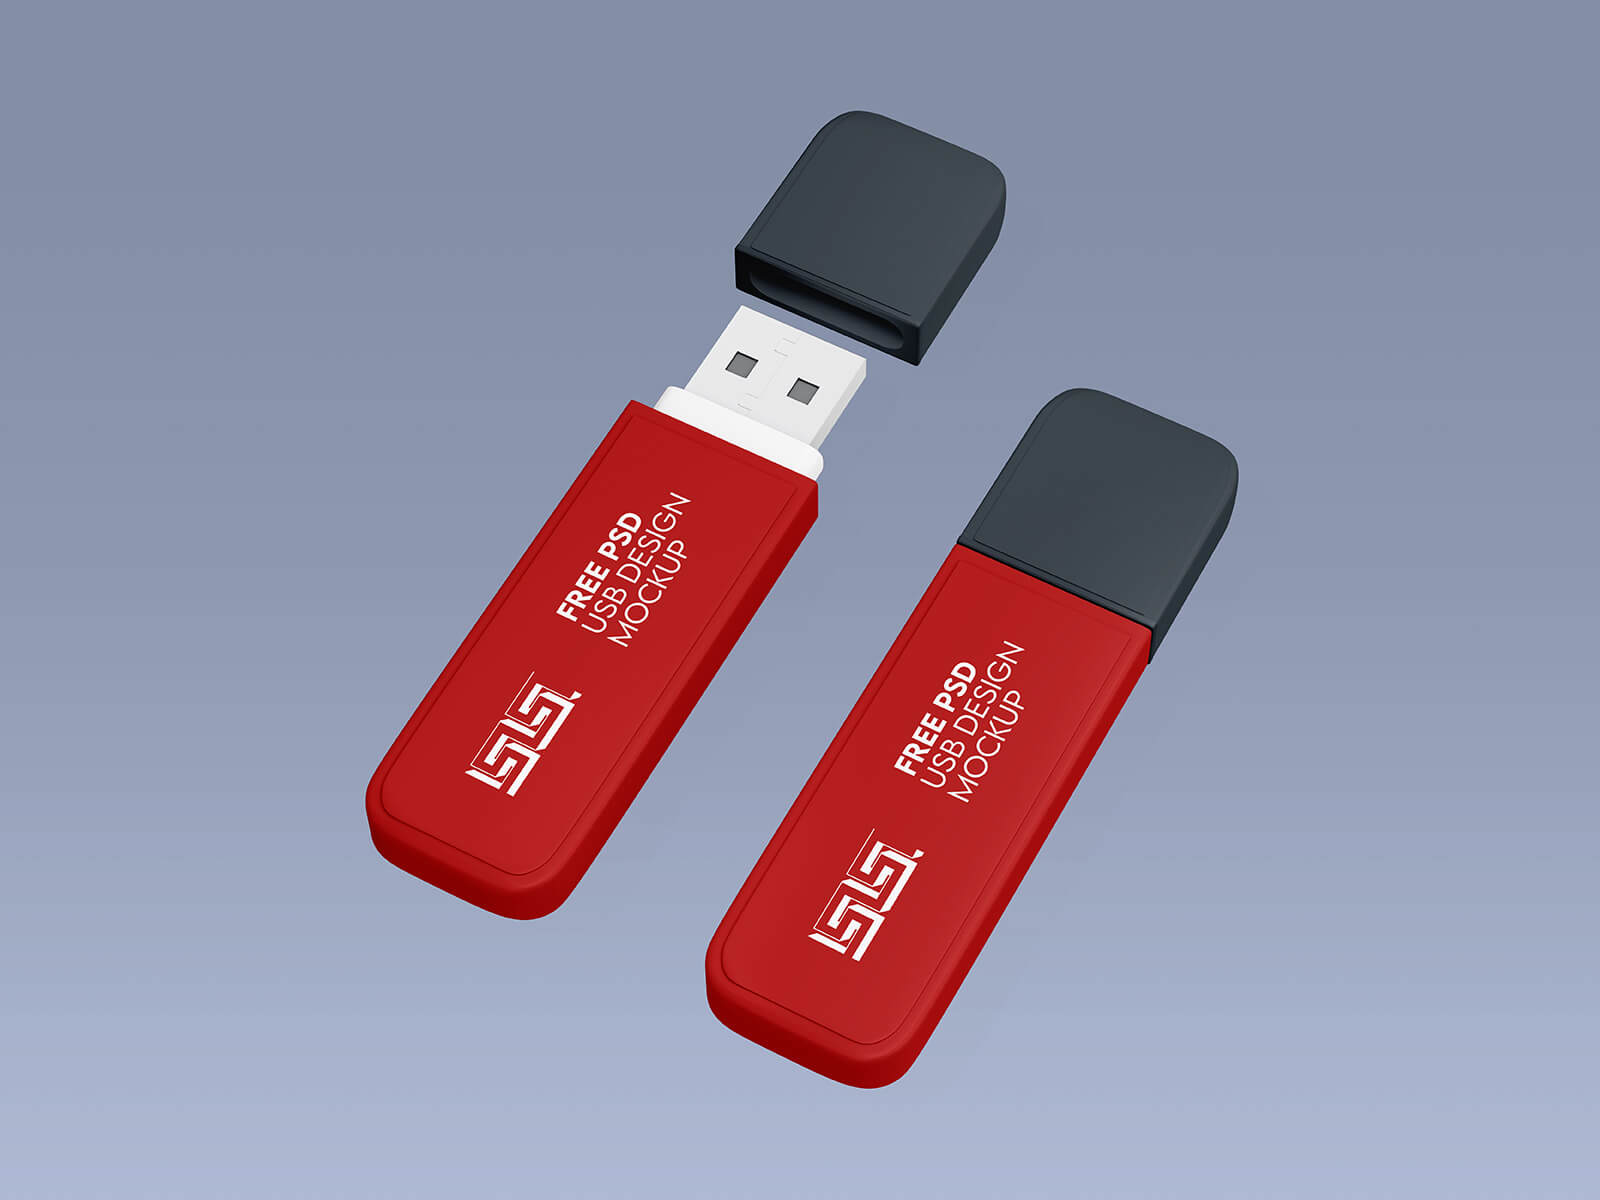 USB Drive Mockup Set - Good